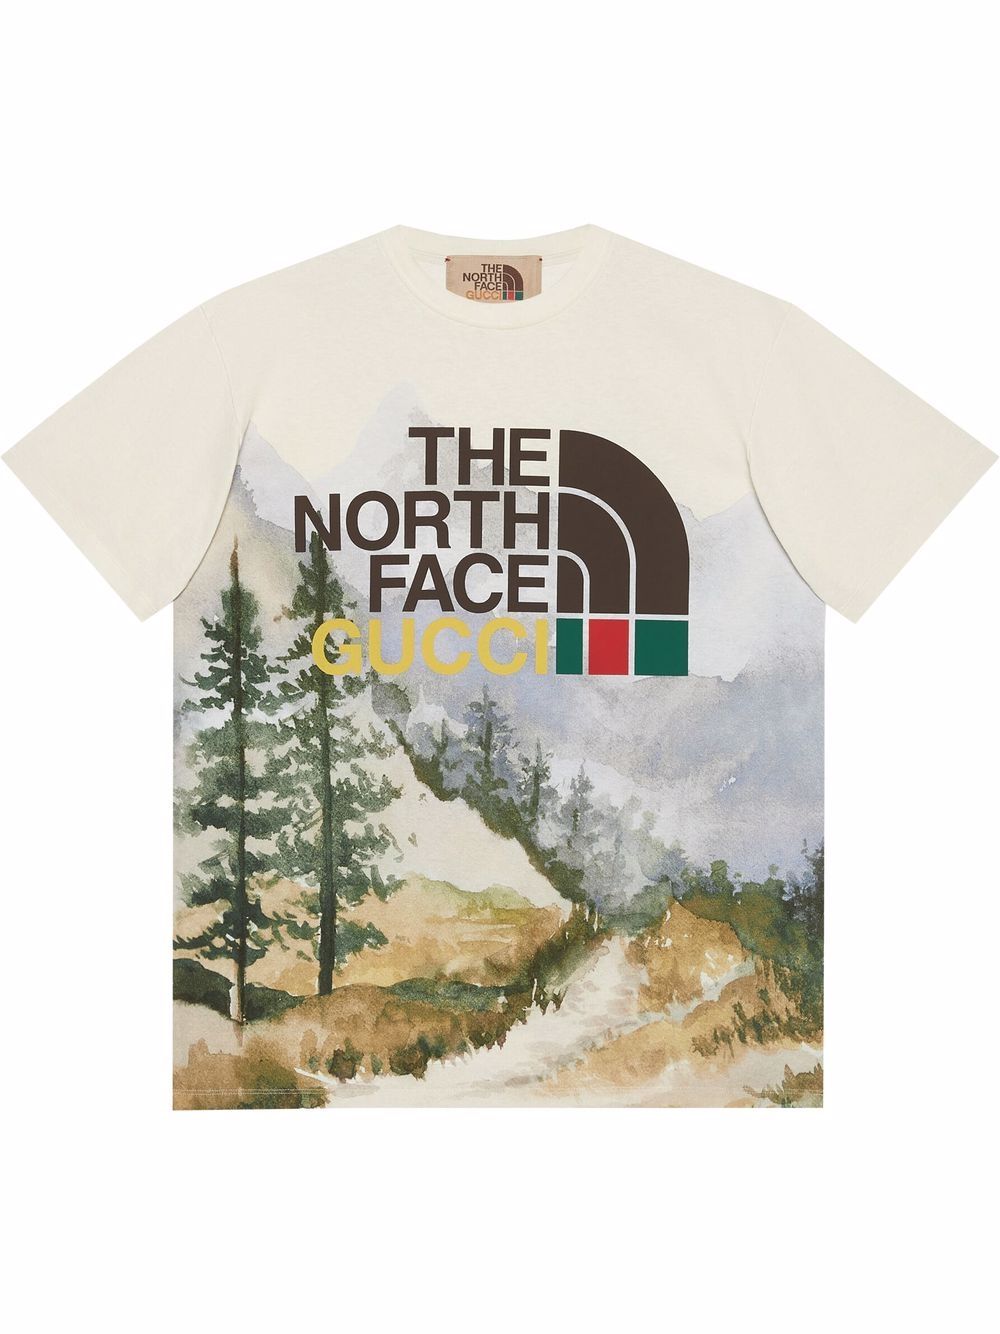 Gucci x The North Face T-shirt - Farfetch